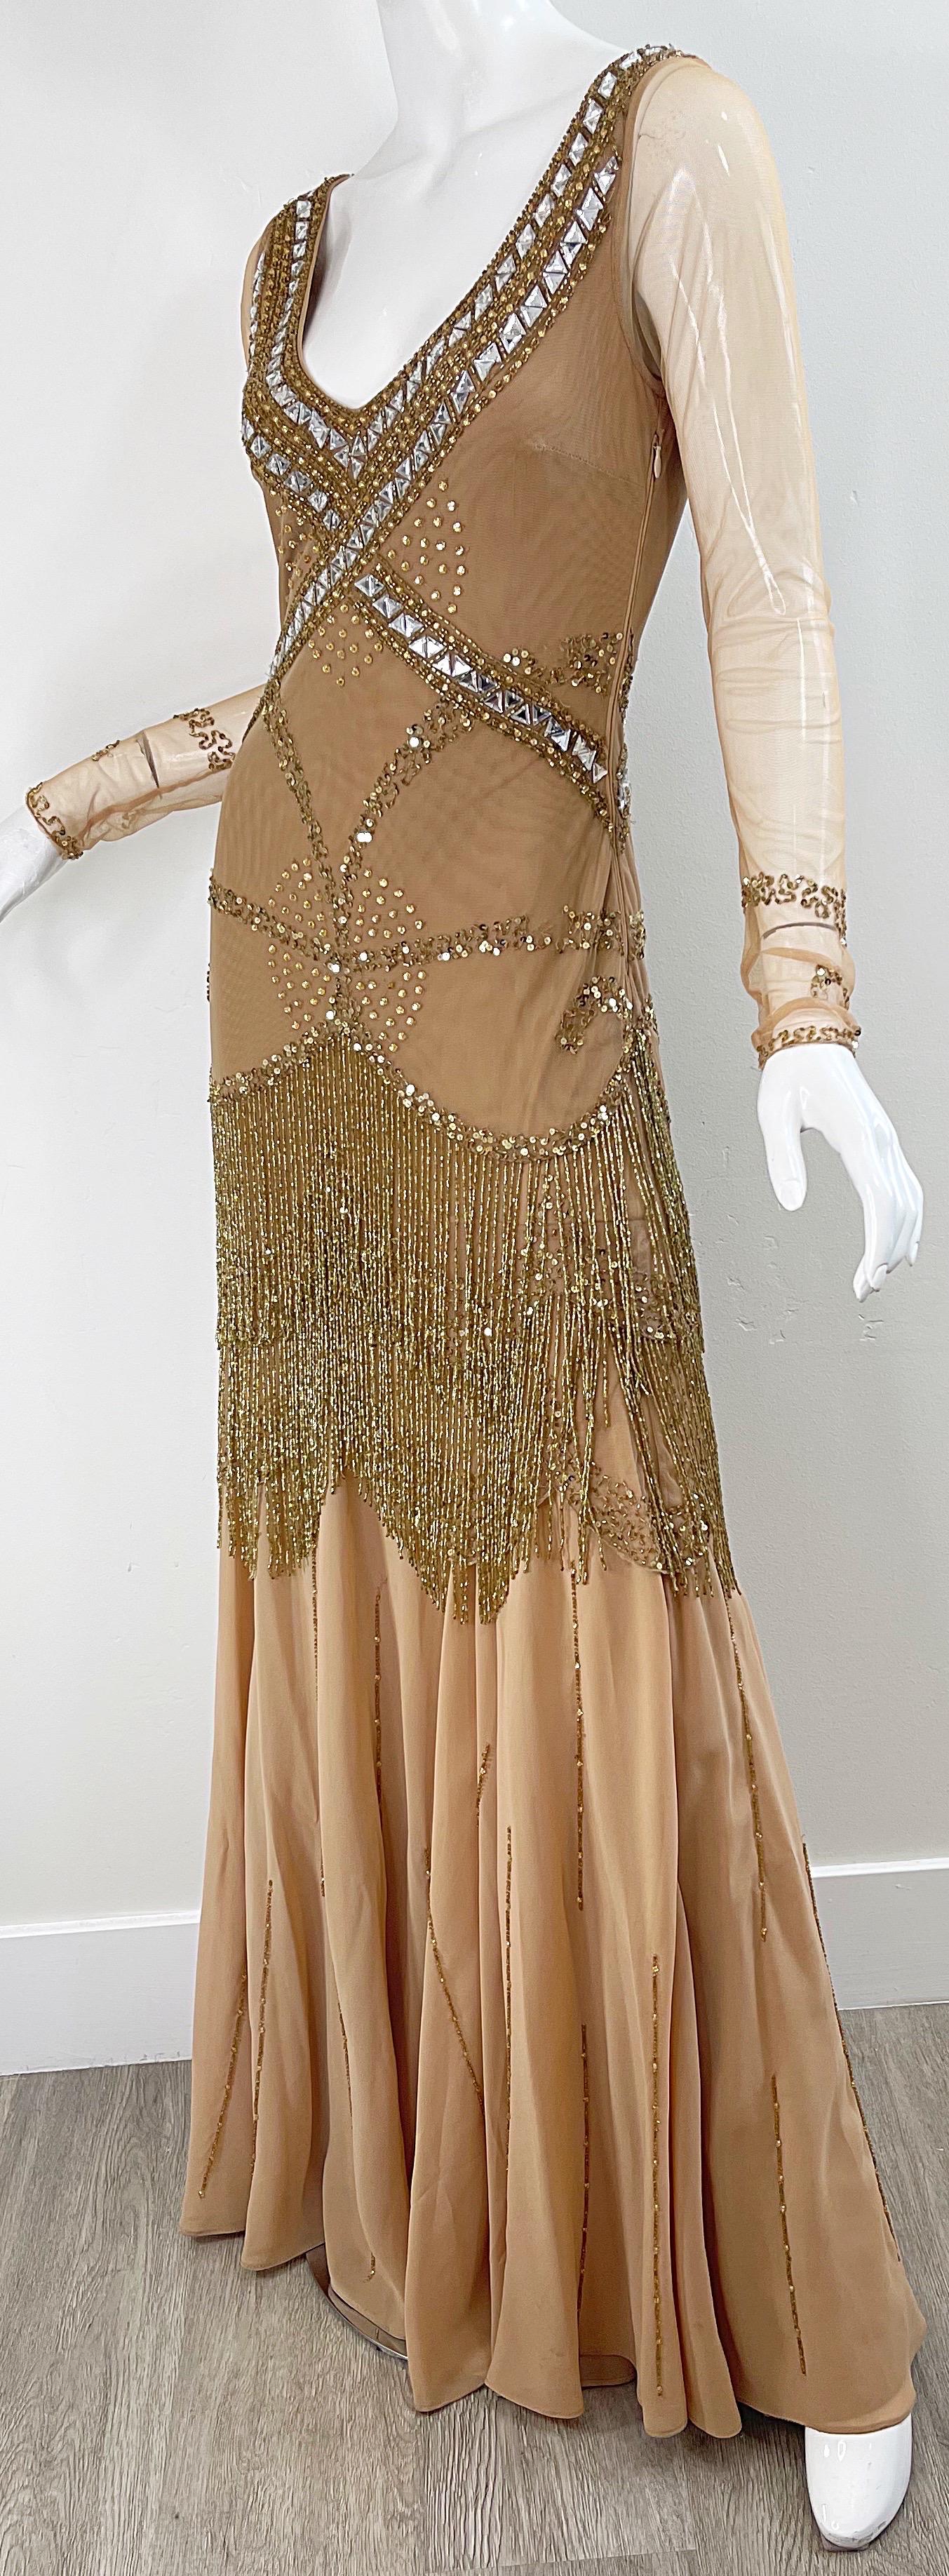 Roberto Cavalli Class 2000s Nude Gold Size 2 / 4 Deco Beaded Fringe Mesh Dress  For Sale 2